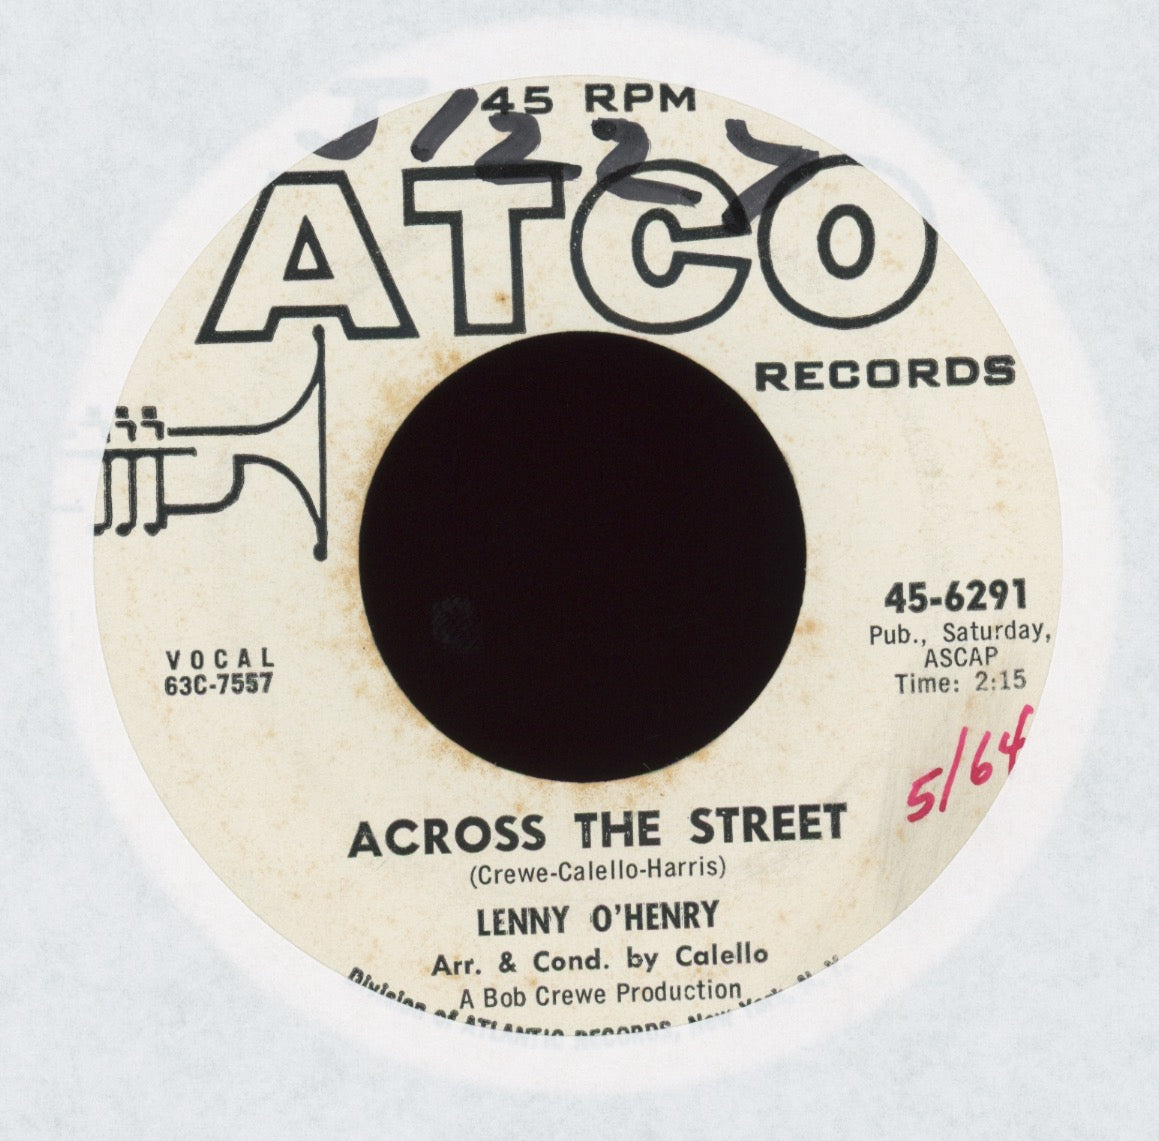 Lenny O'Henry - Across The Street on Atco Promo